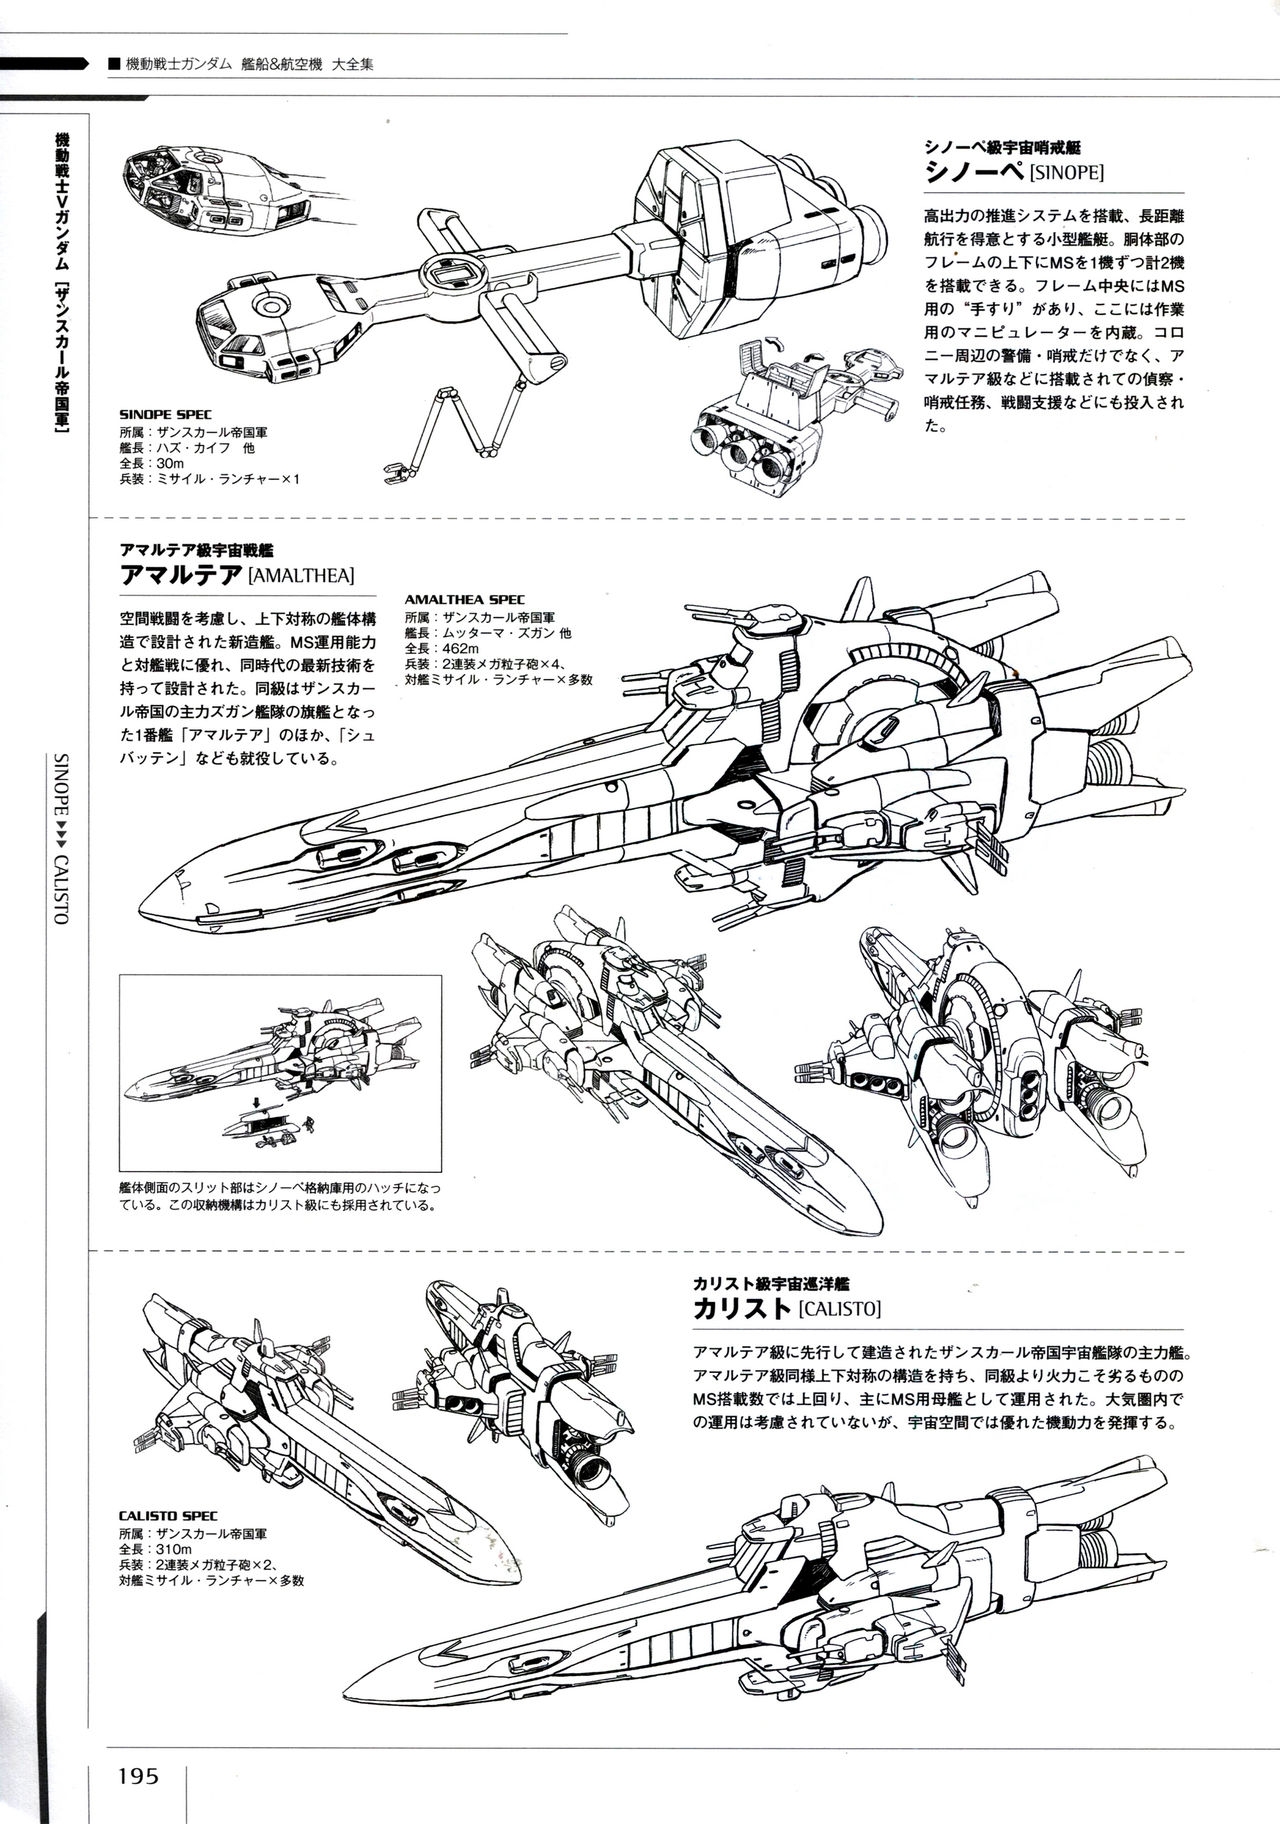 Mobile Suit Gundam - Ship & Aerospace Plane Encyclopedia - Revised Edition 200